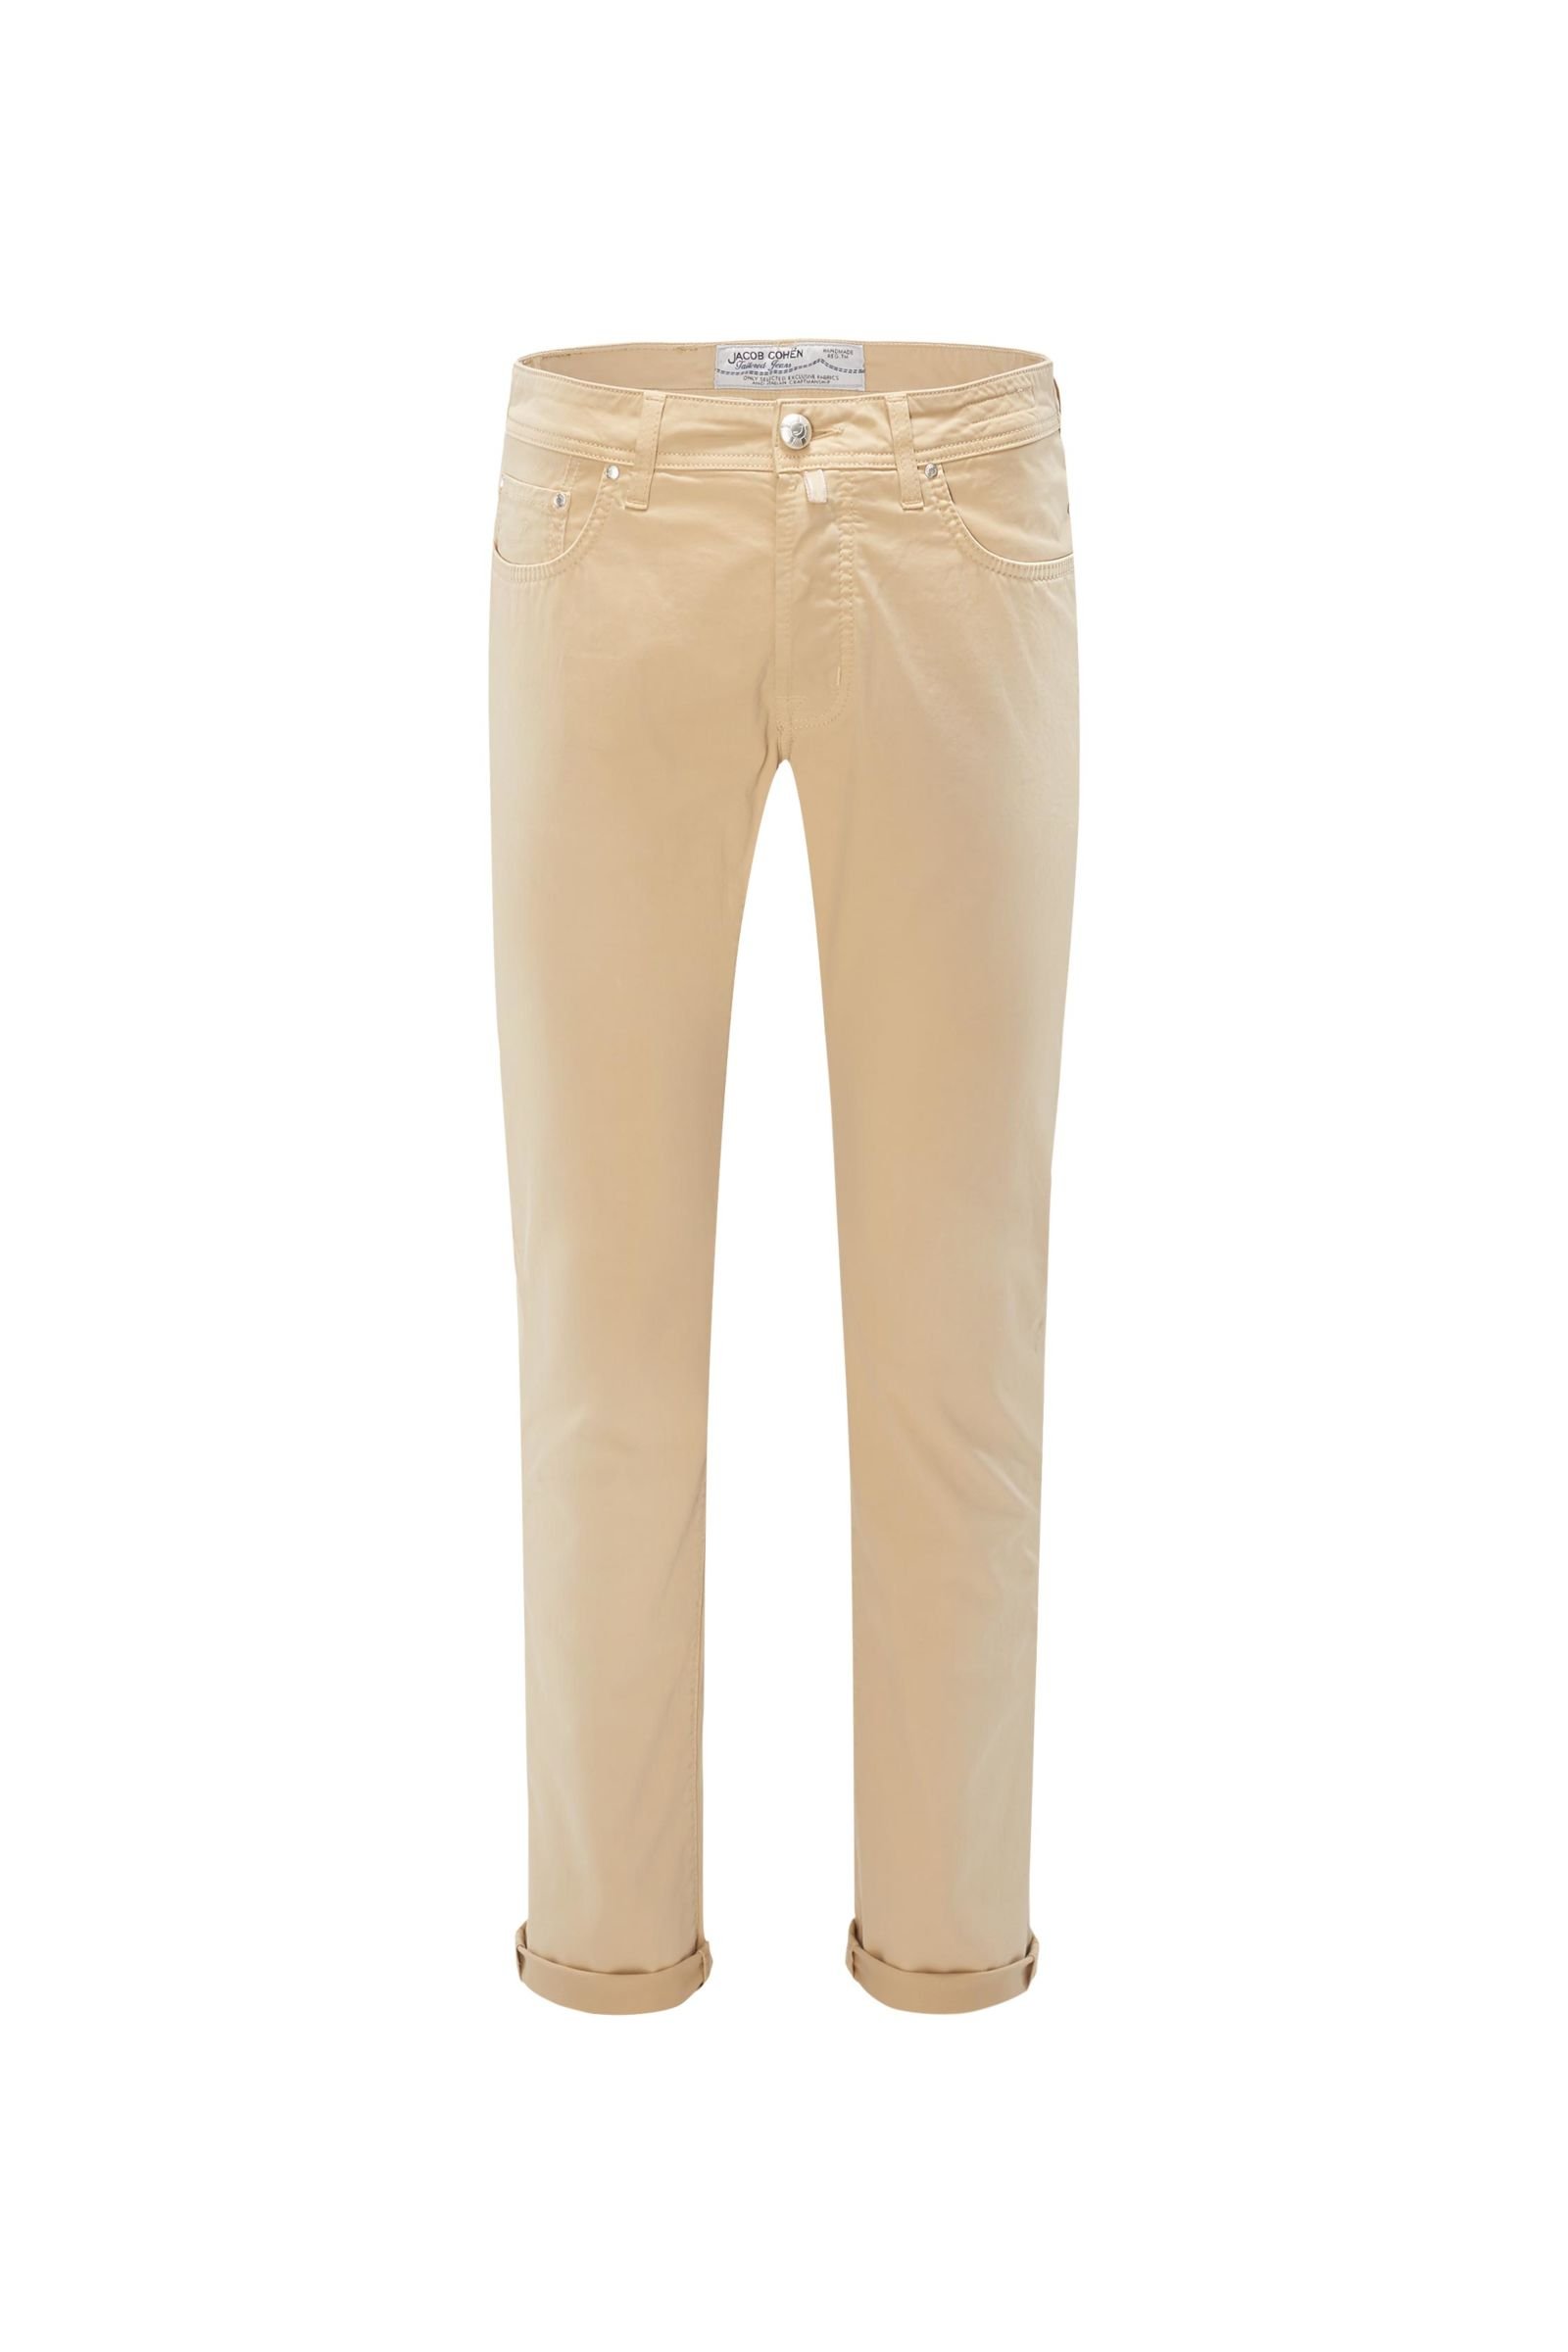 Cotton trousers 'PW688 Comfort Slim Fit' beige